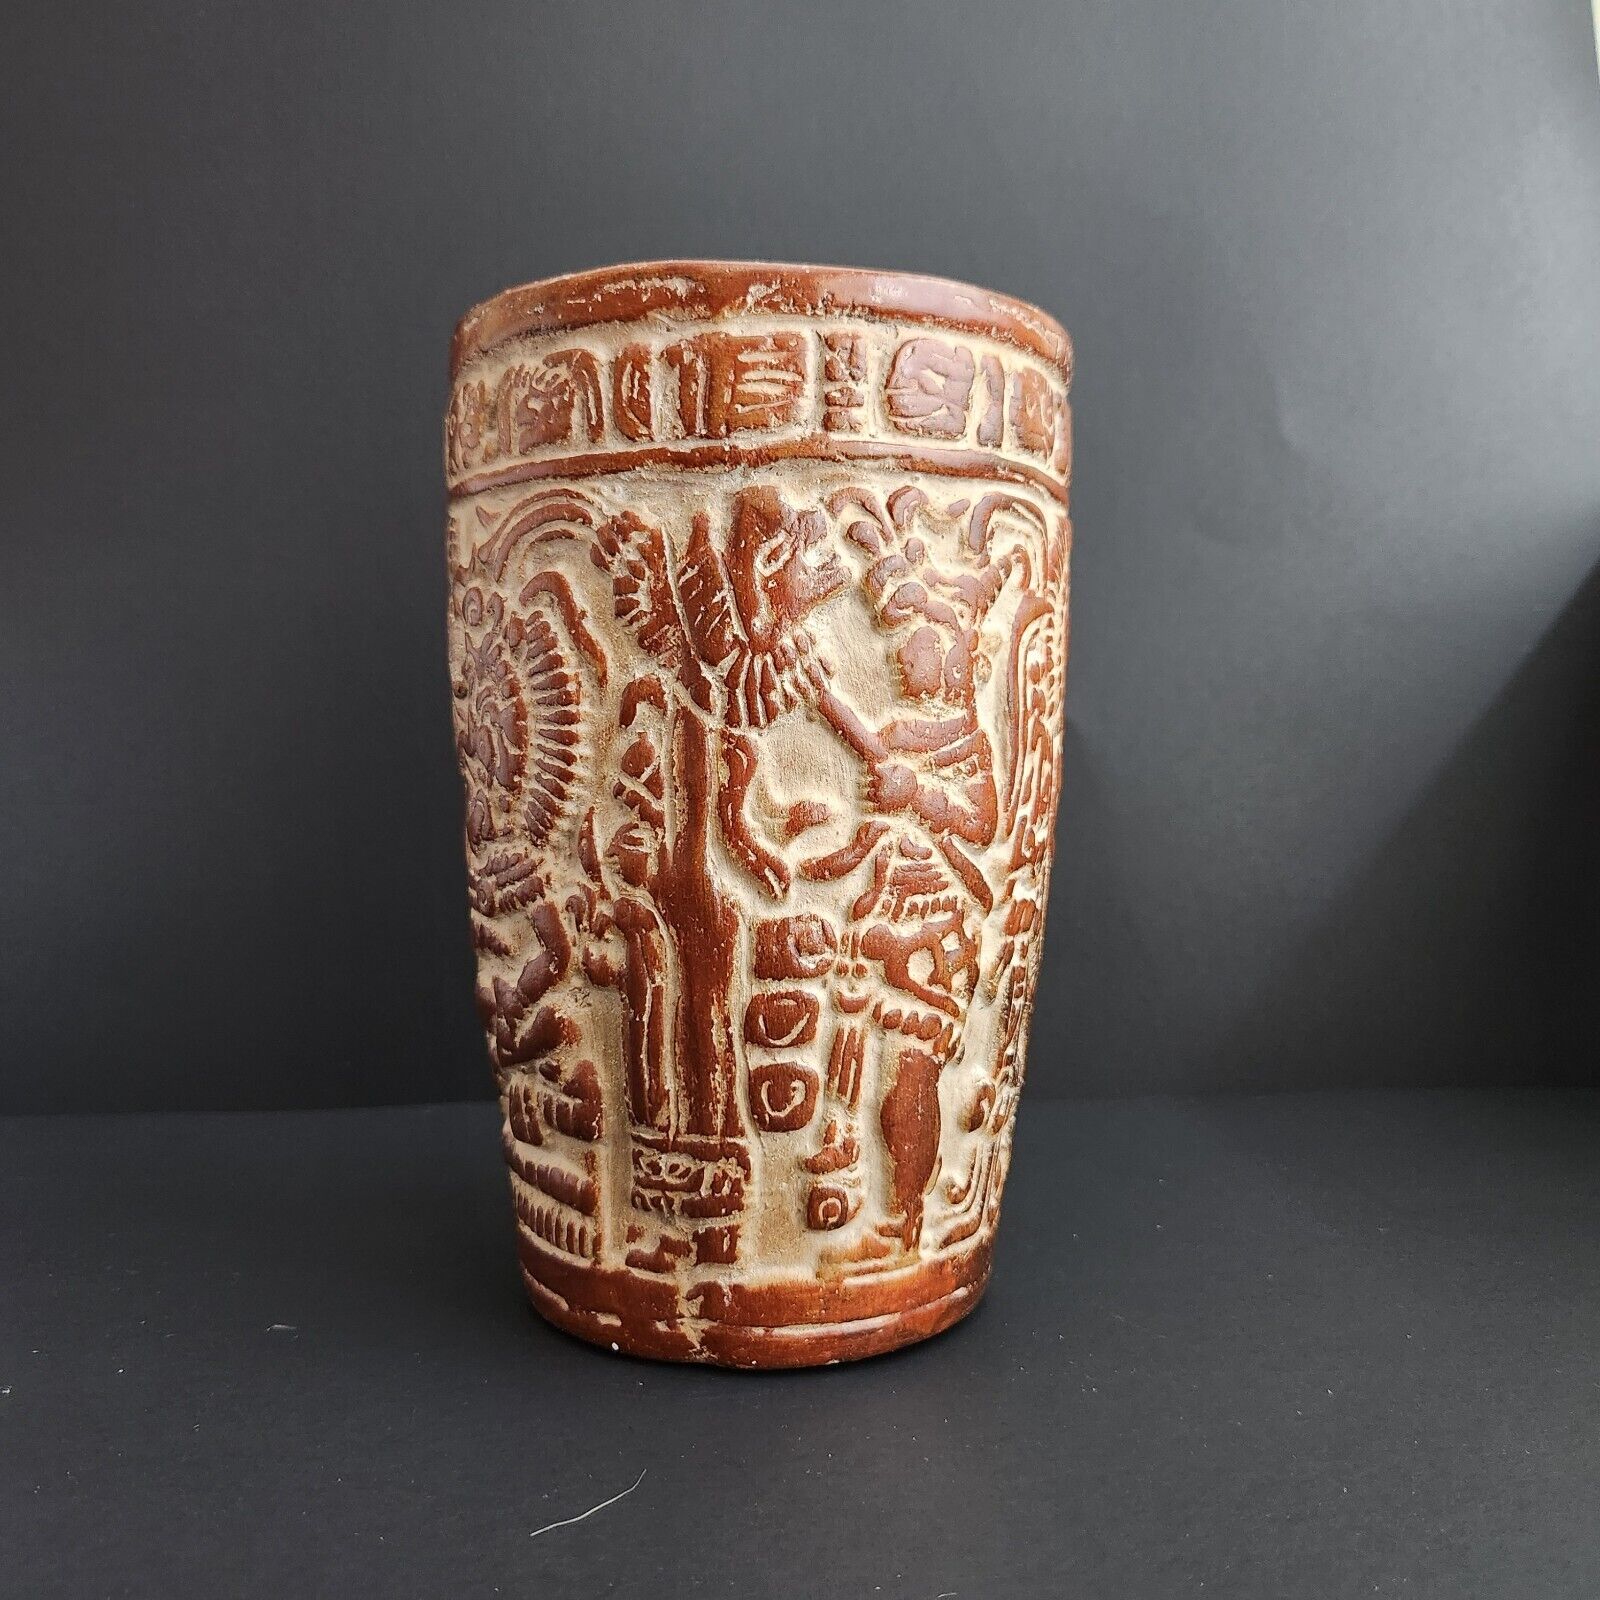 Antique Aztec Mayan 8.5